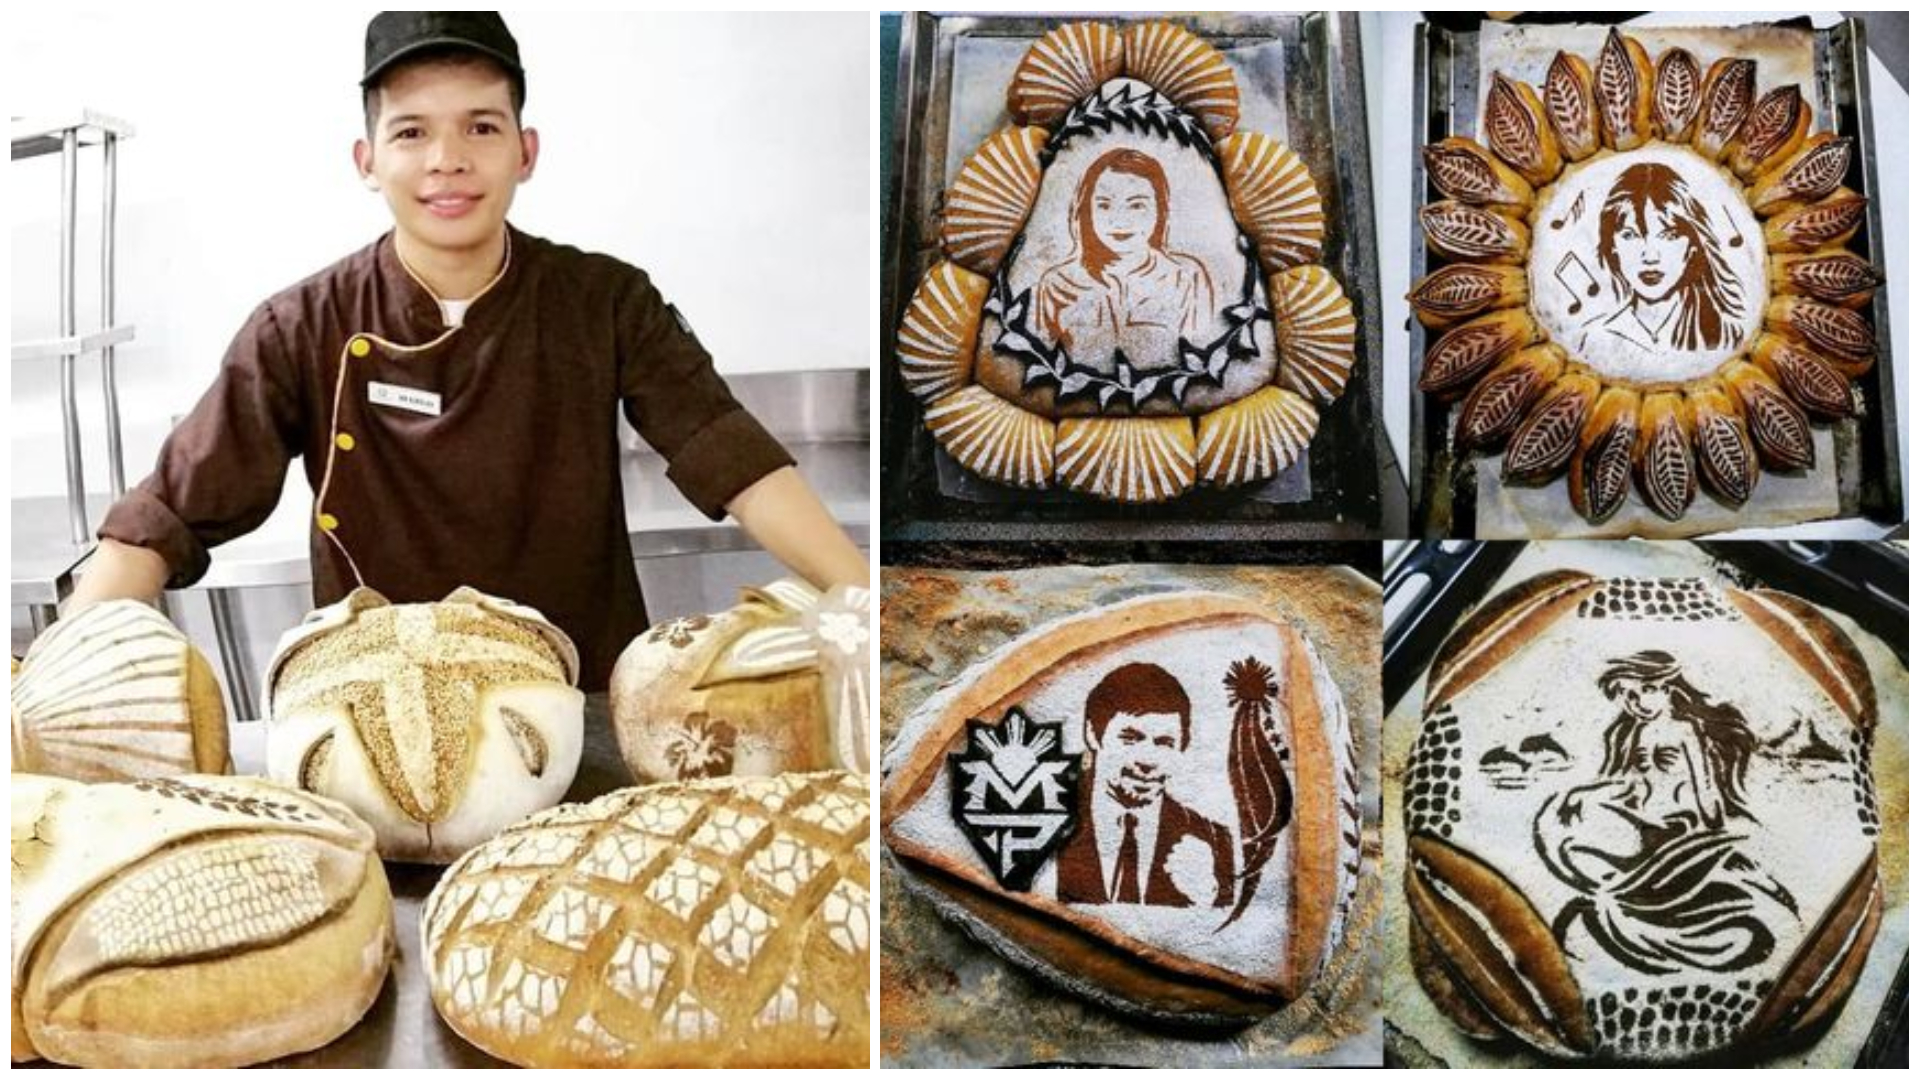 1 Cebuano artisan baker